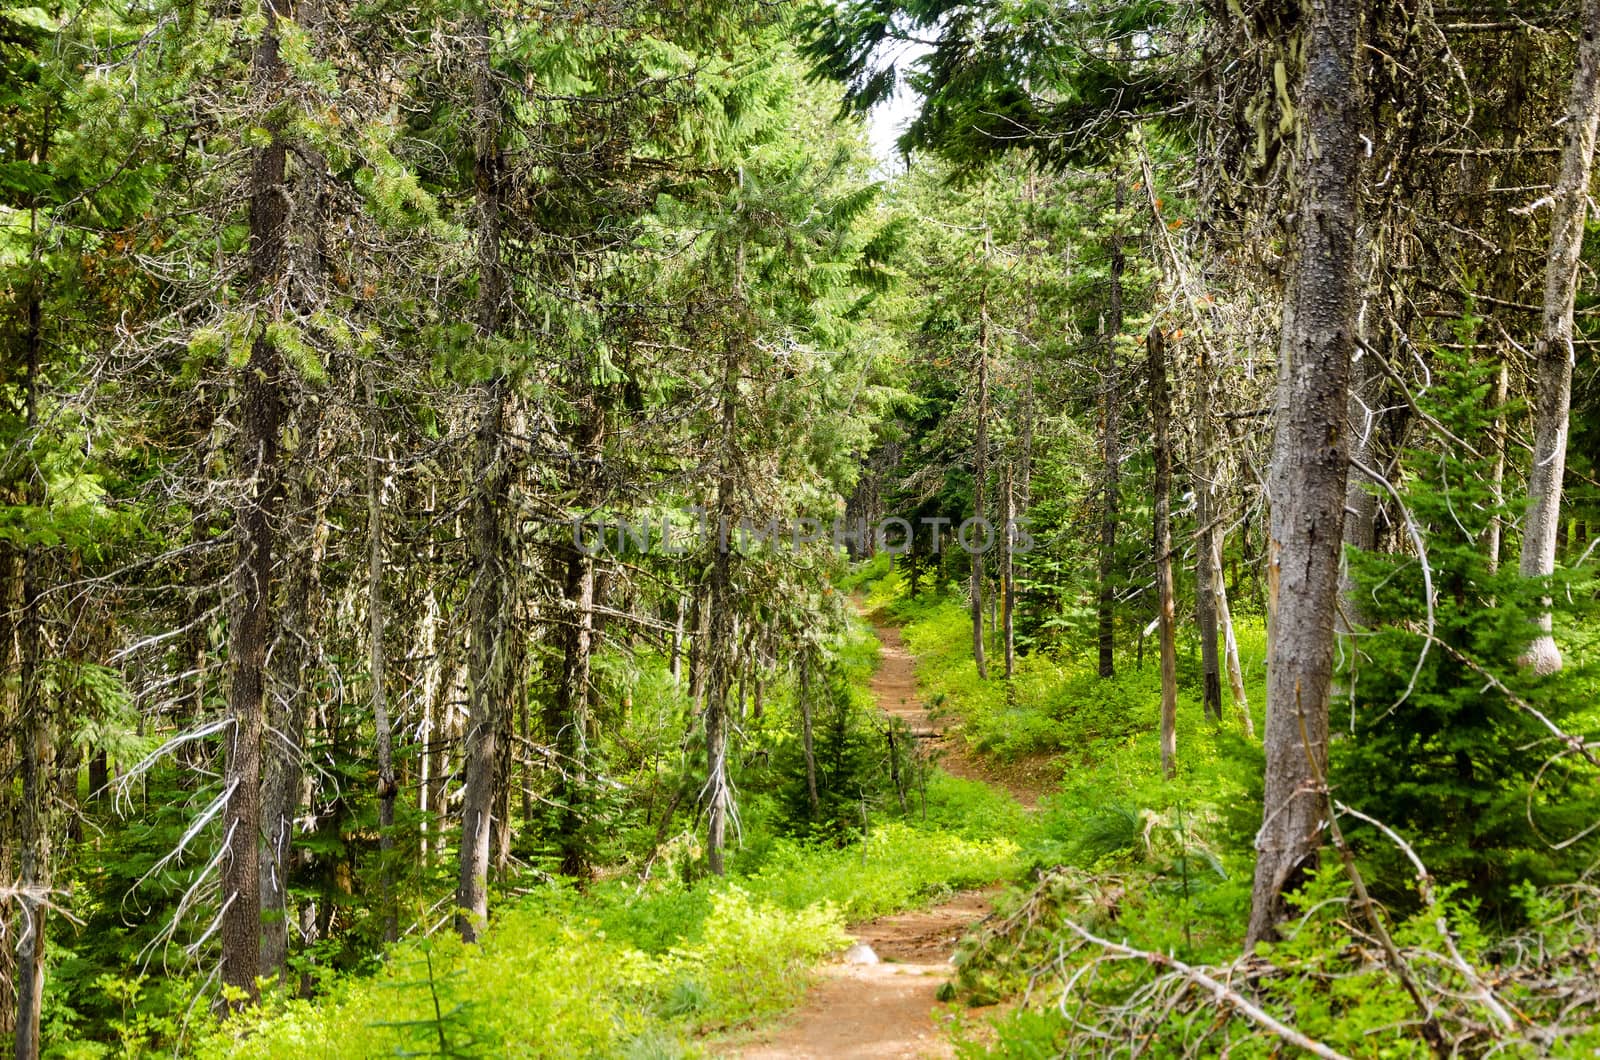 Trail running through Mt. Hood National Forest